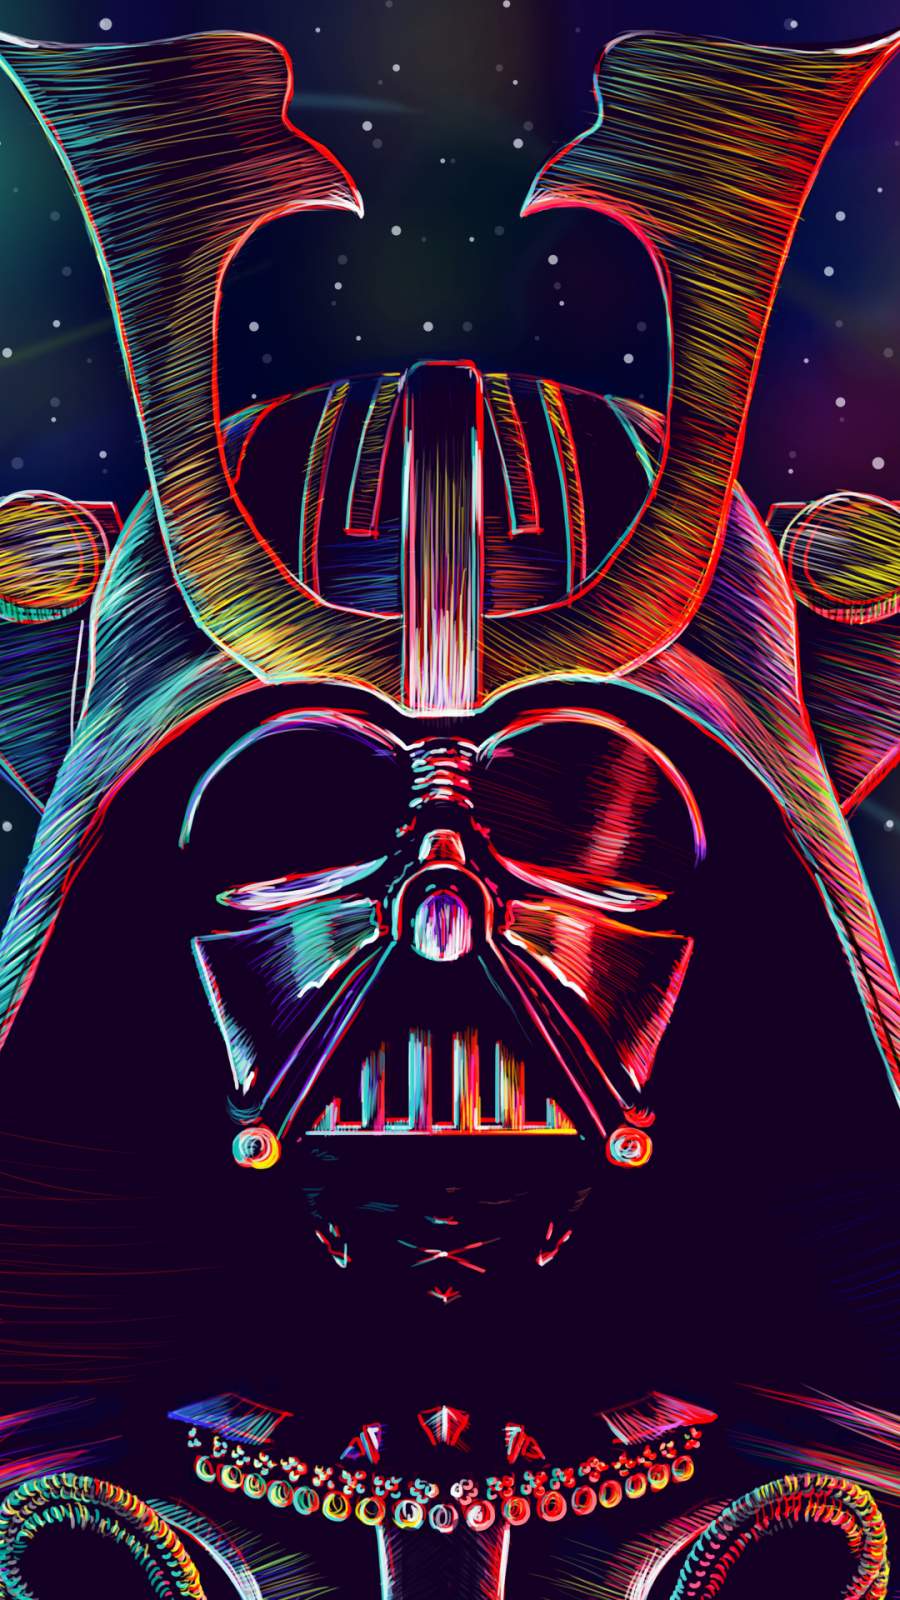 Star Wars Darth Vader phone wallpaper 1080P 2k 4k Full HD Wallpapers  Backgrounds Free Download  Wallpaper Crafter